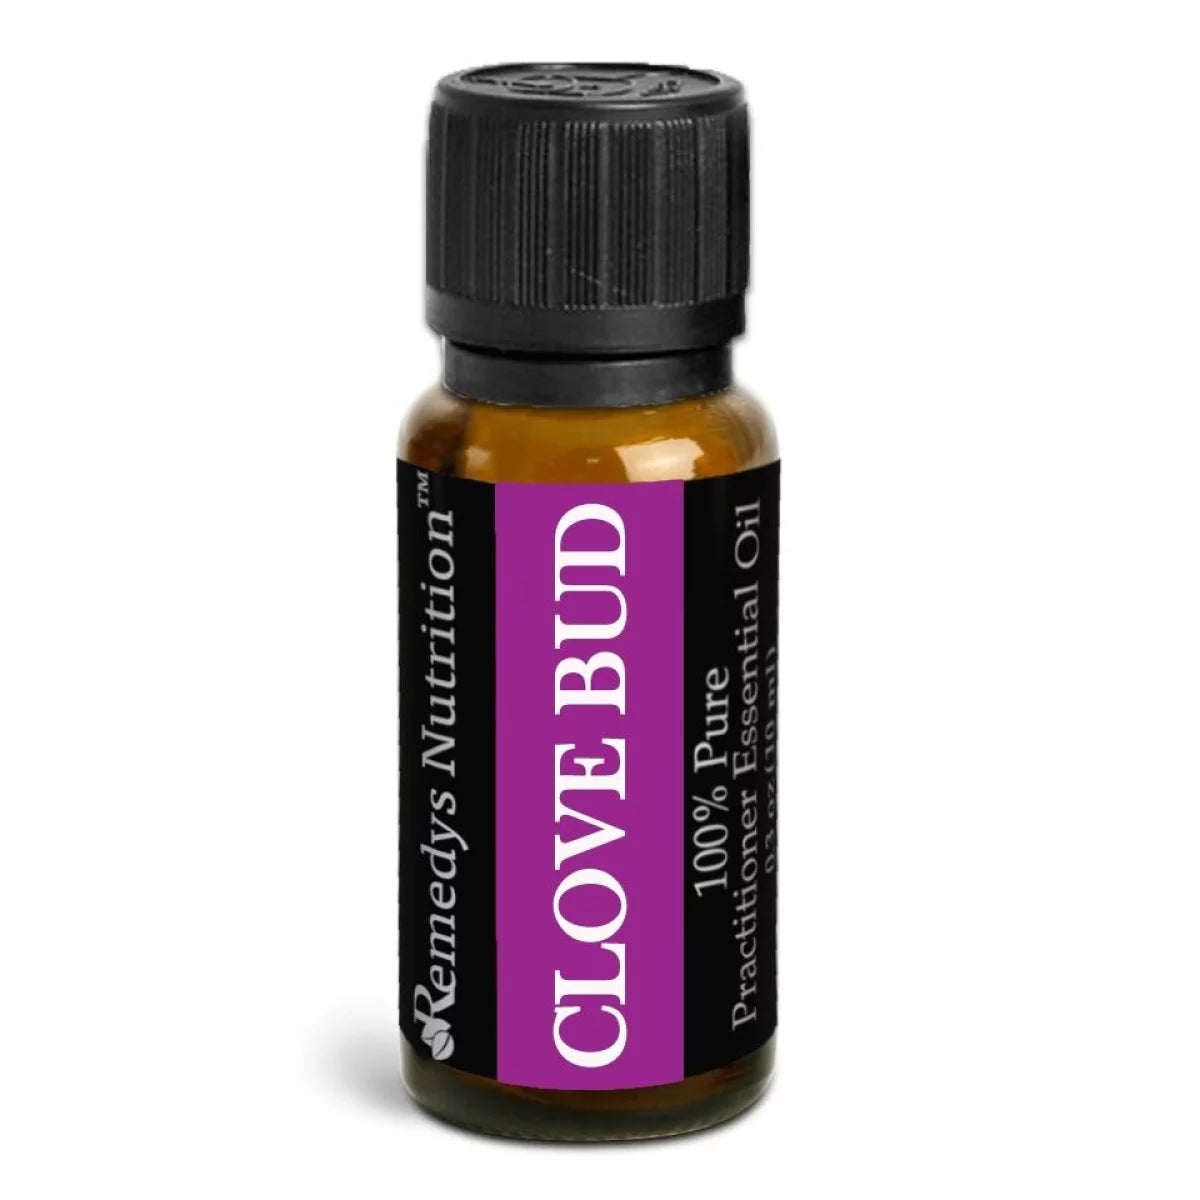 Clove Bud Essential Oil | 10 mL